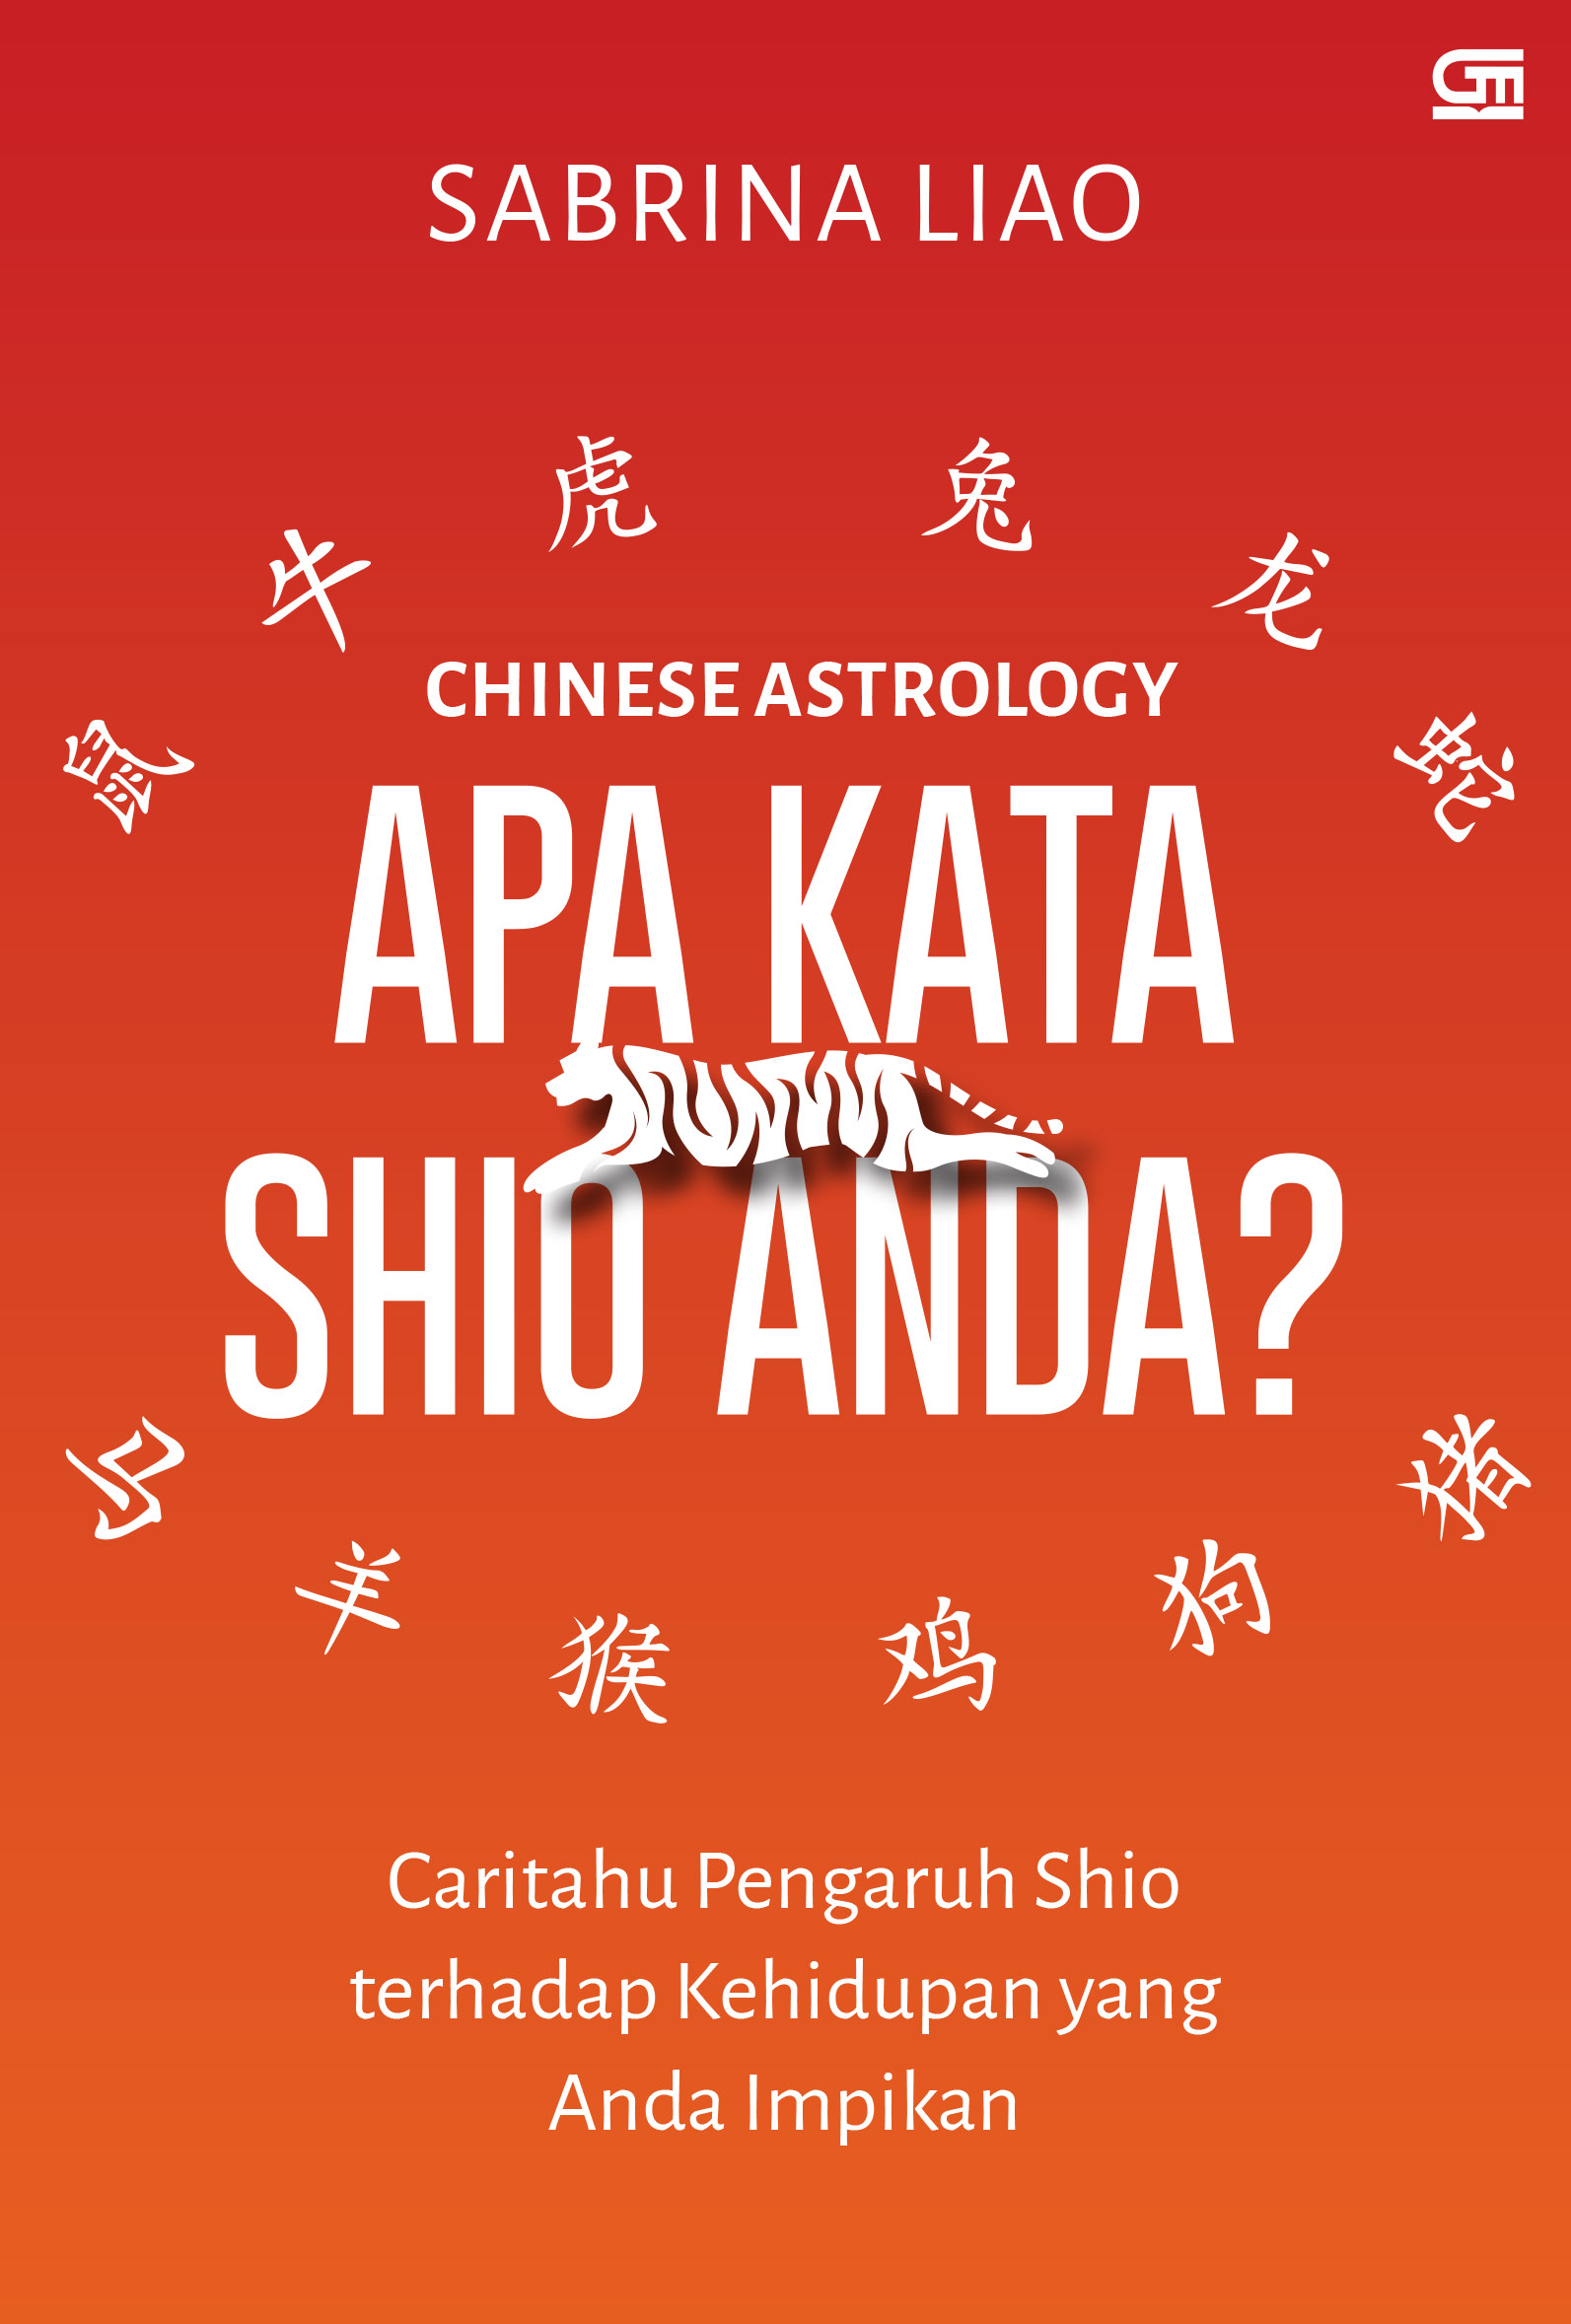 Chinese Astrology: Apa Kata Shio Anda